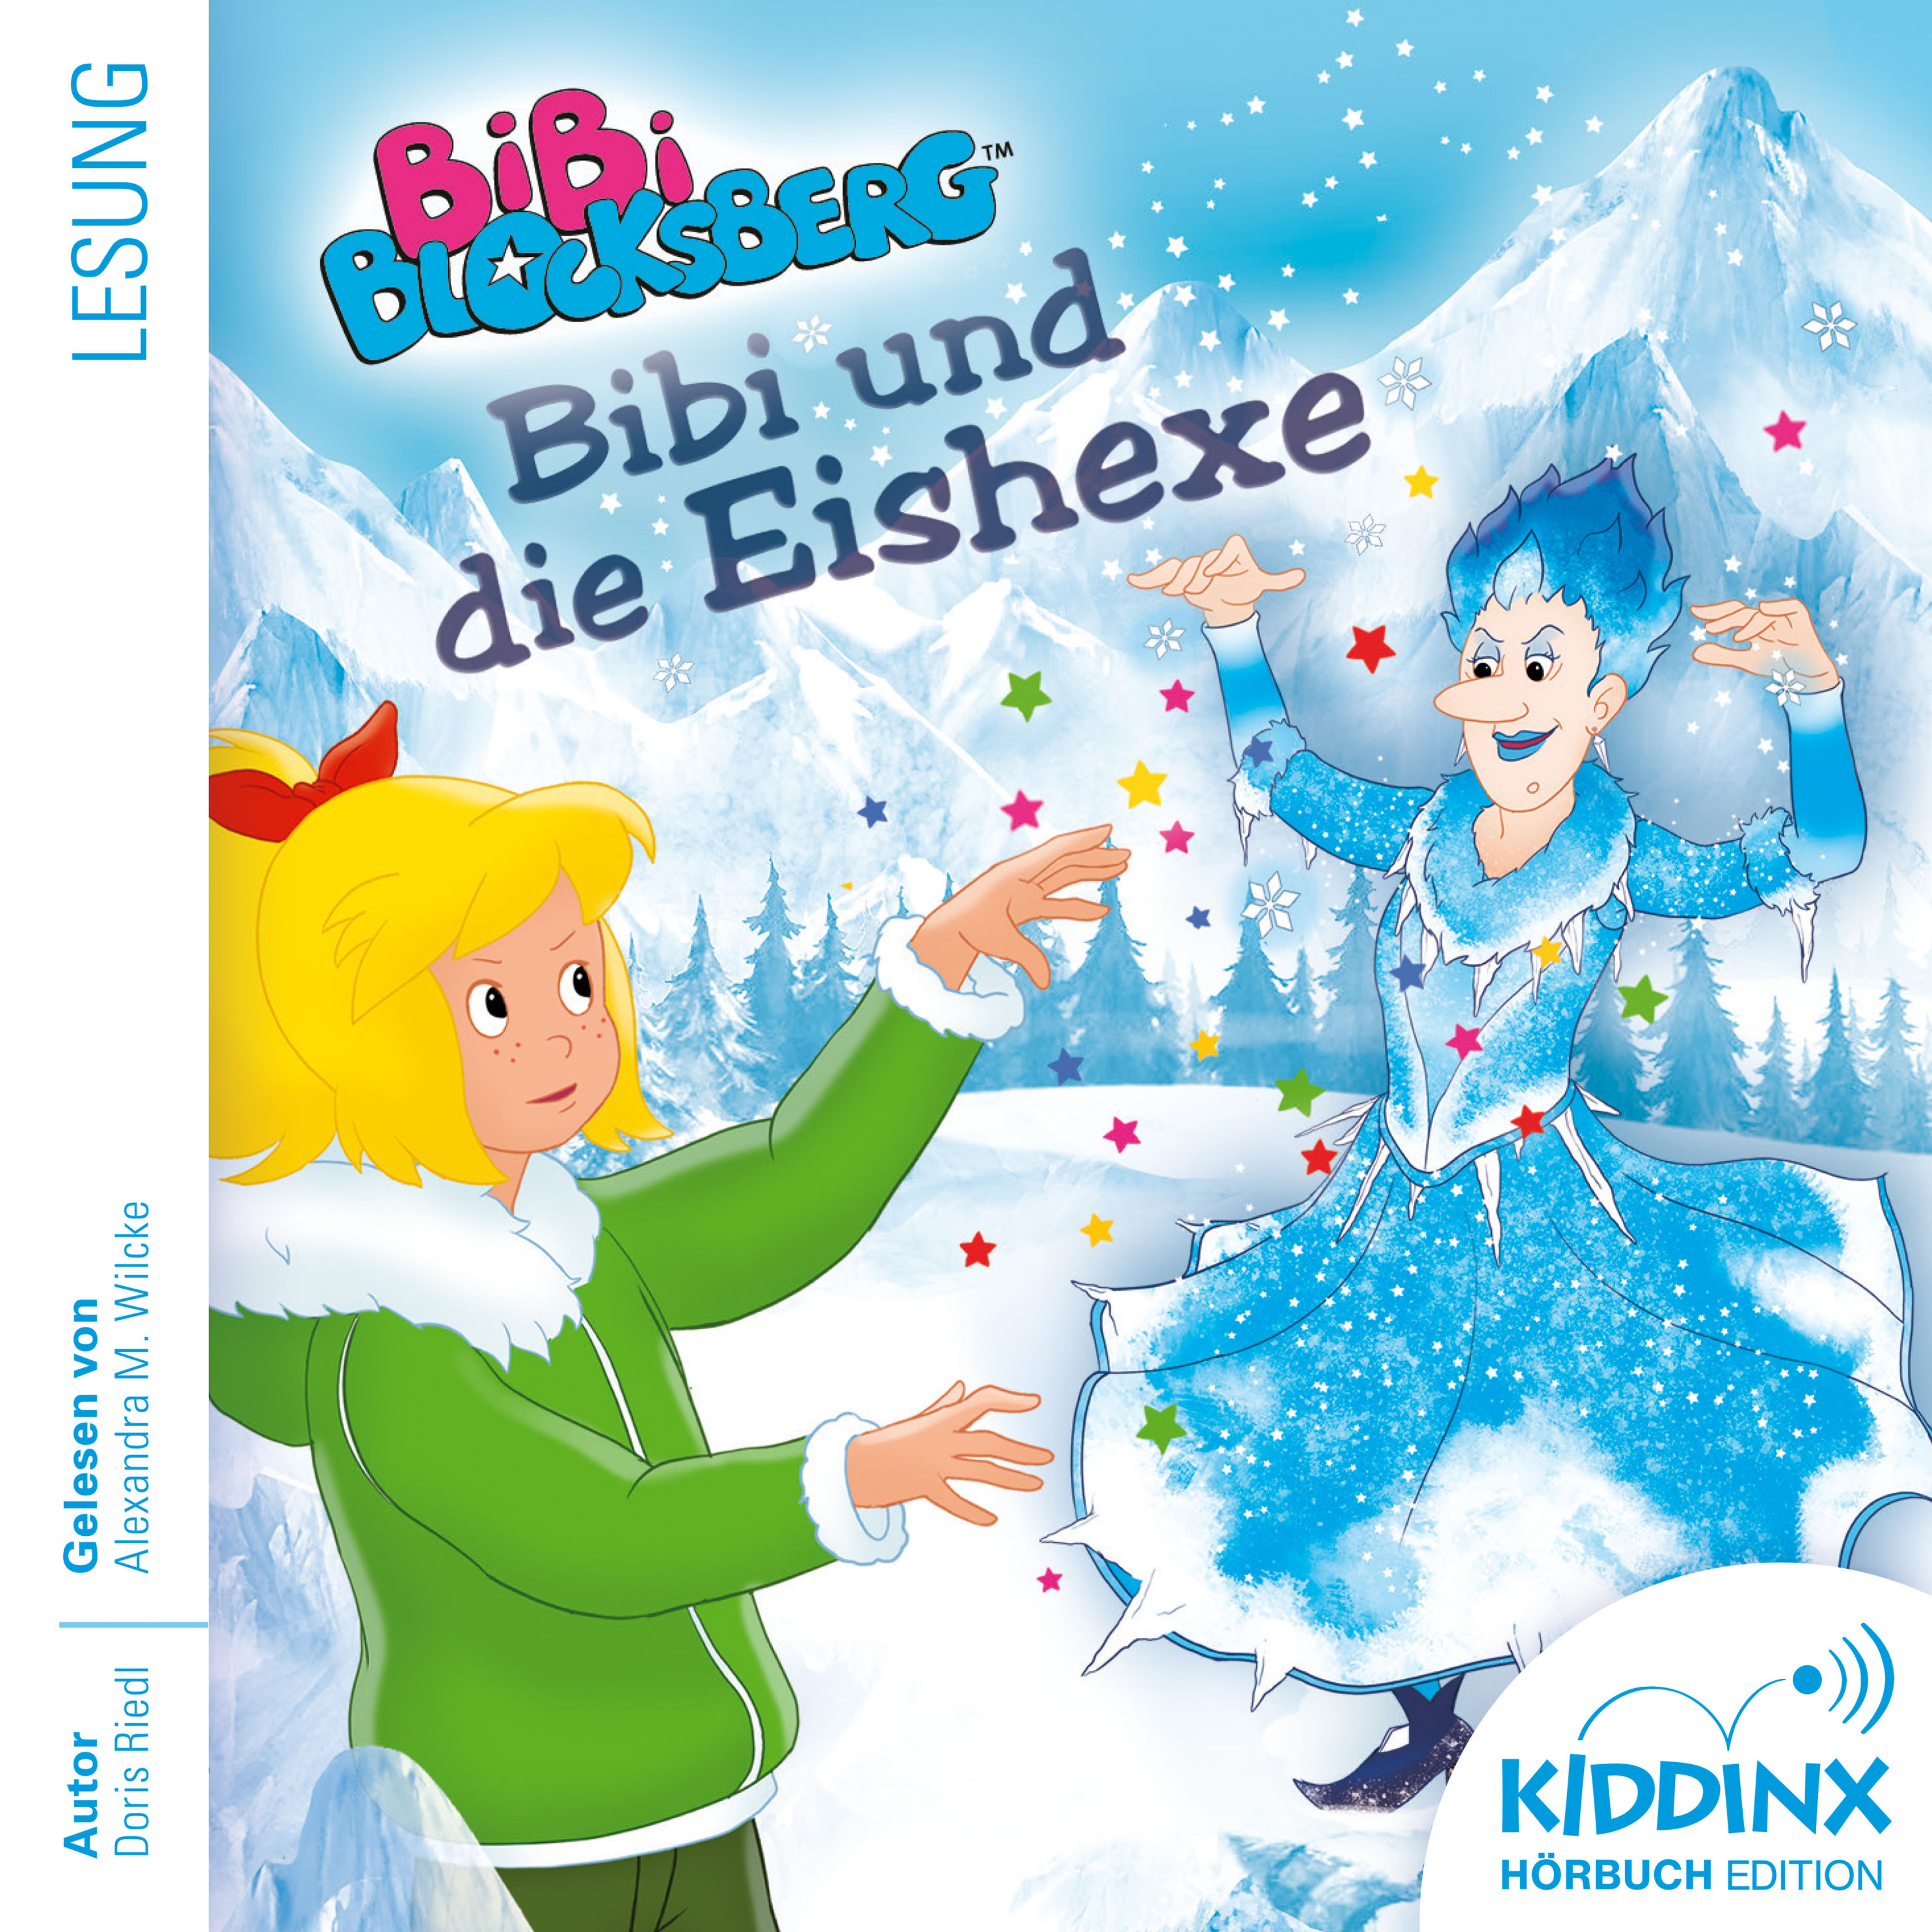 Bibi Blocksberg - 15 - Bibi Blocksberg - Hörbuch: Bibi und die Eishexe  Hörbuch Download